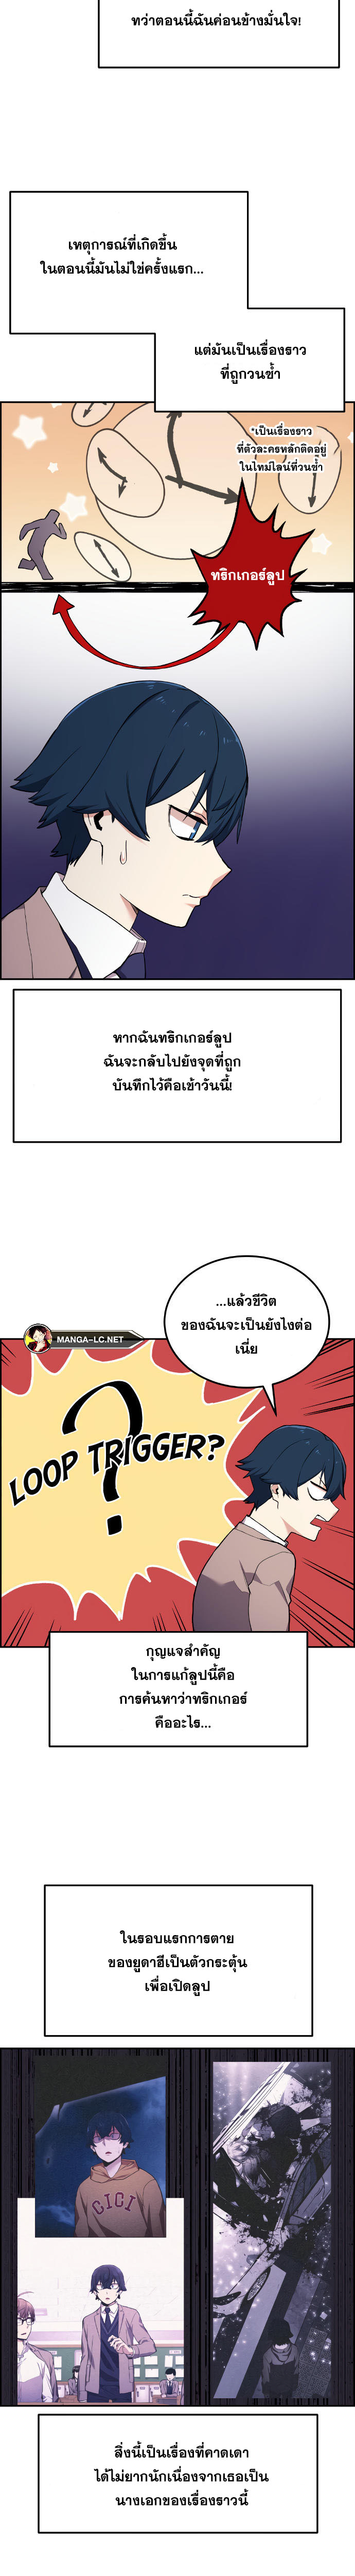 Webtoon Character Na Kang Lim ร ยธโ€ขร ยธยญร ยธโขร ยธโ€”ร ยธยตร ยนห 2 (18)